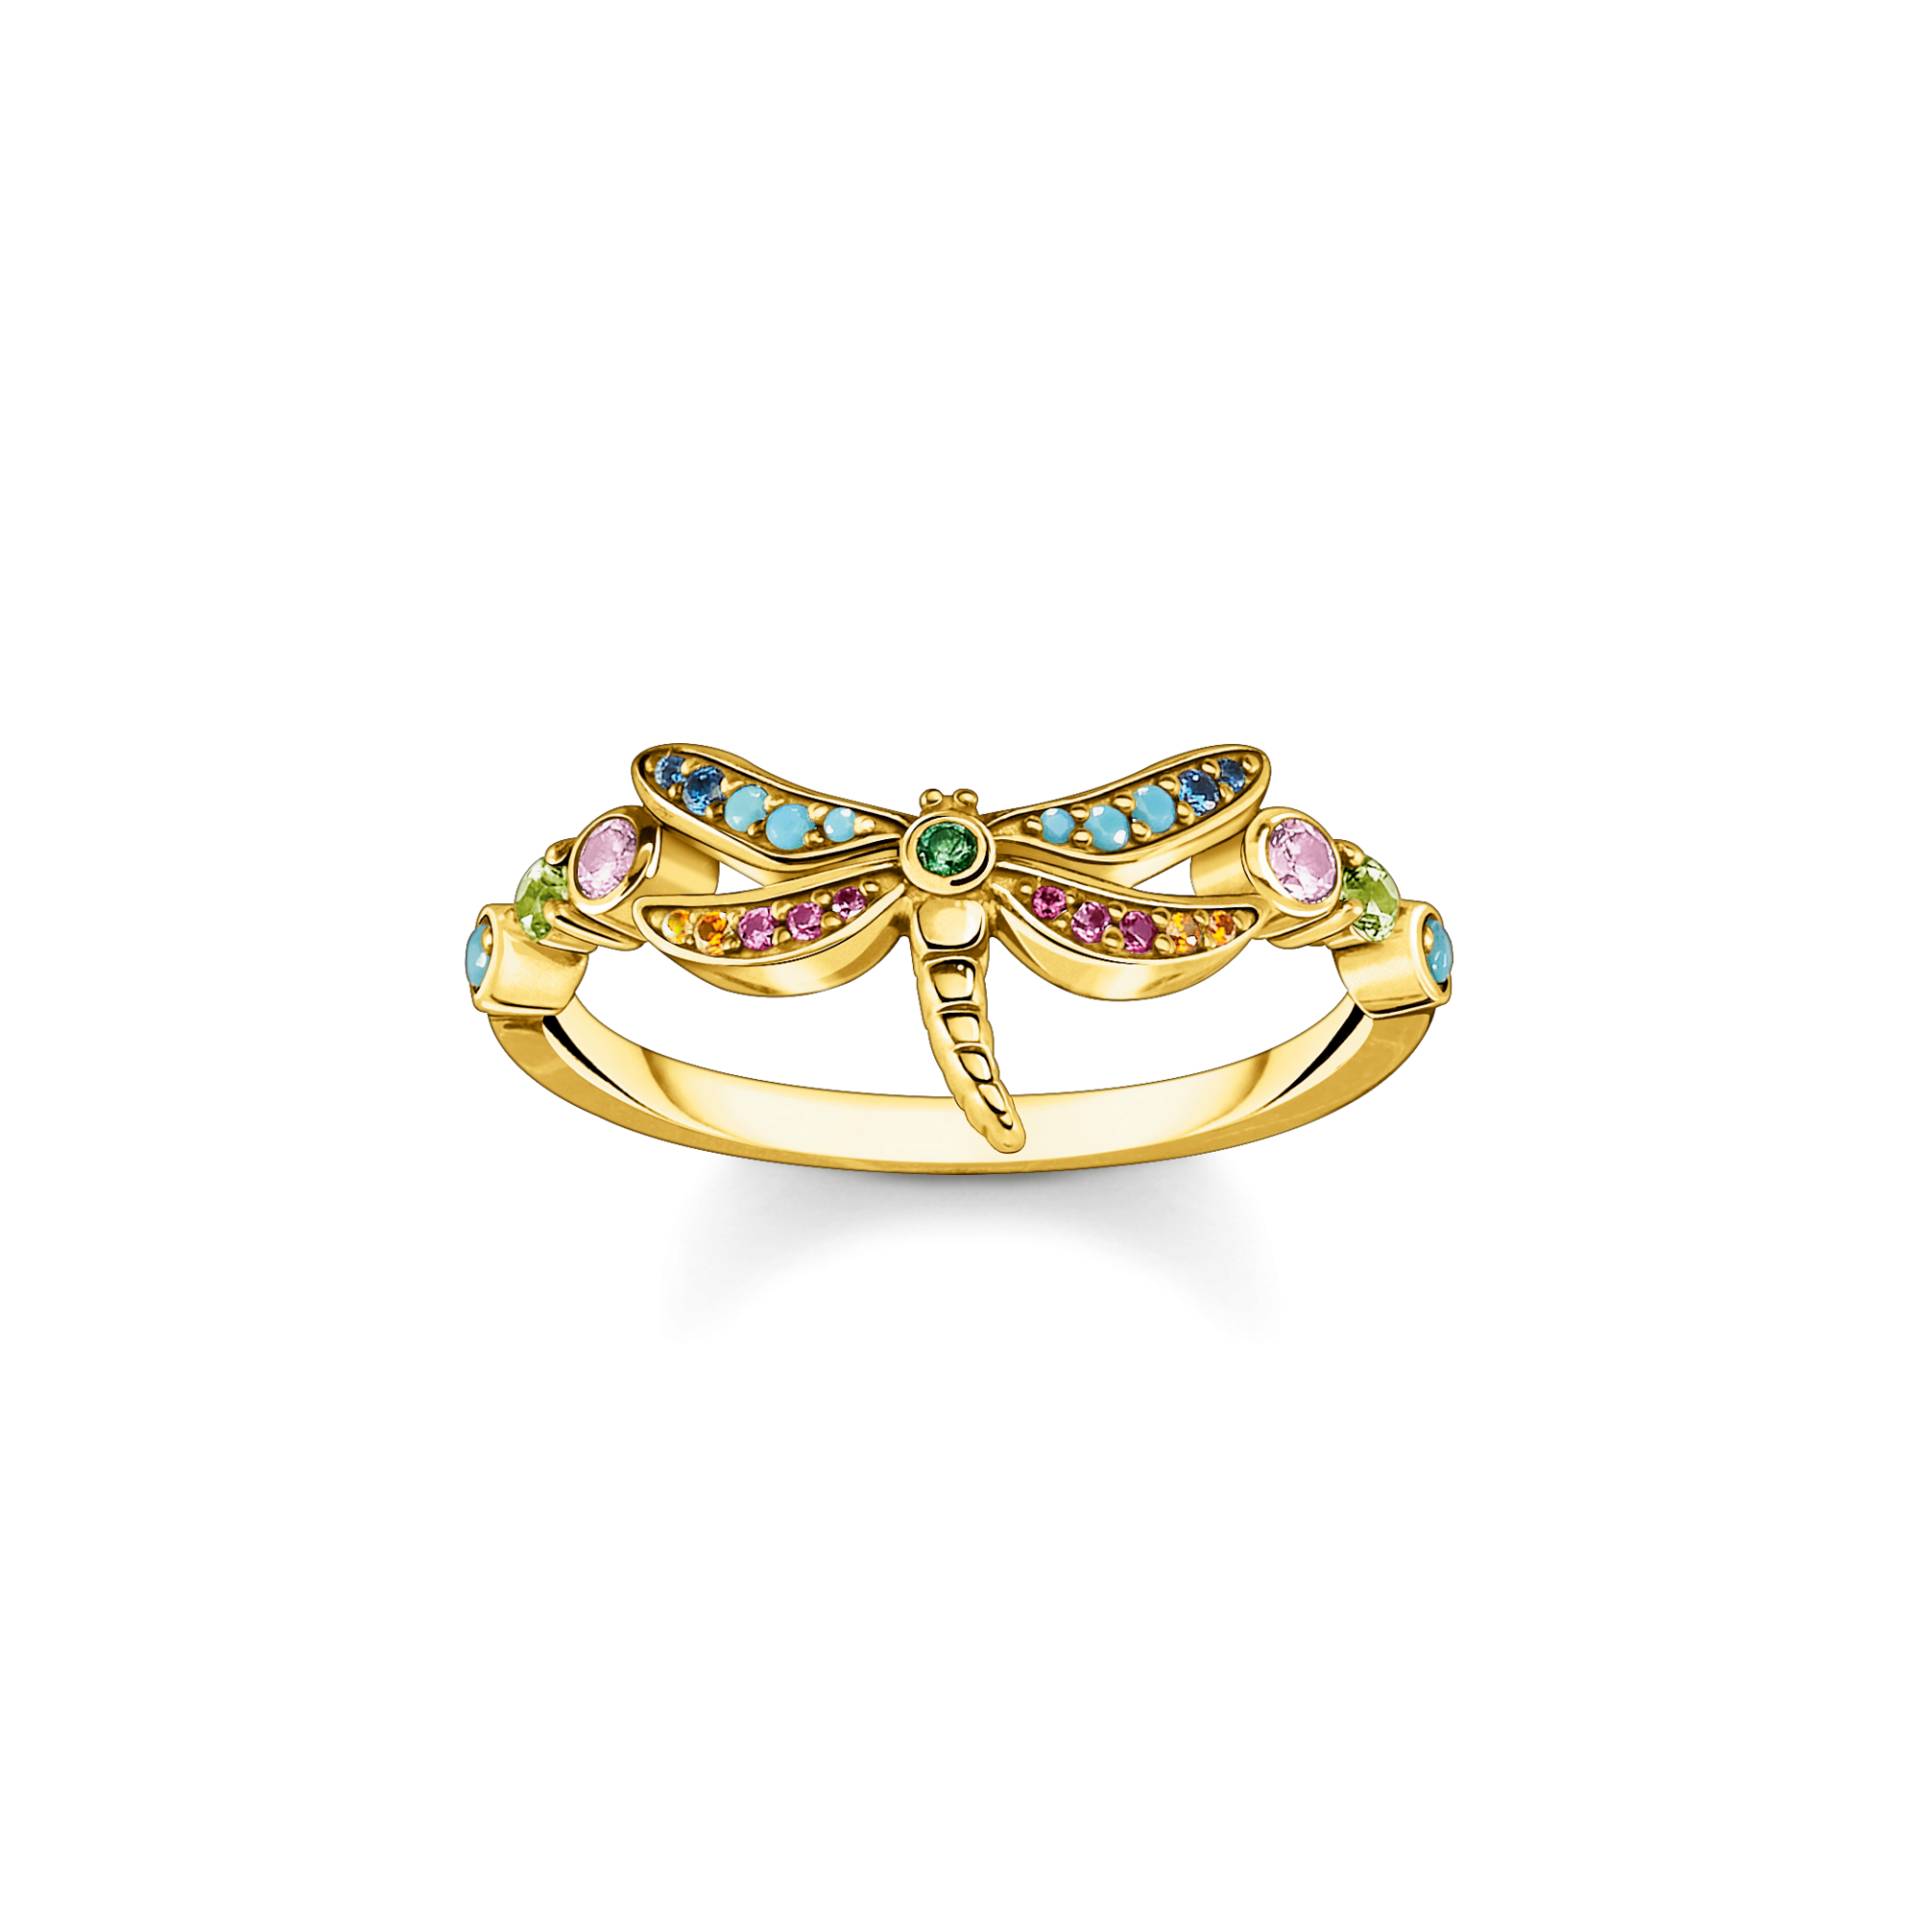 Thomas Sabo Ring Libelle mit bunten Steinen gold mehrfarbig TR2383-315-7-50 von Thomas Sabo